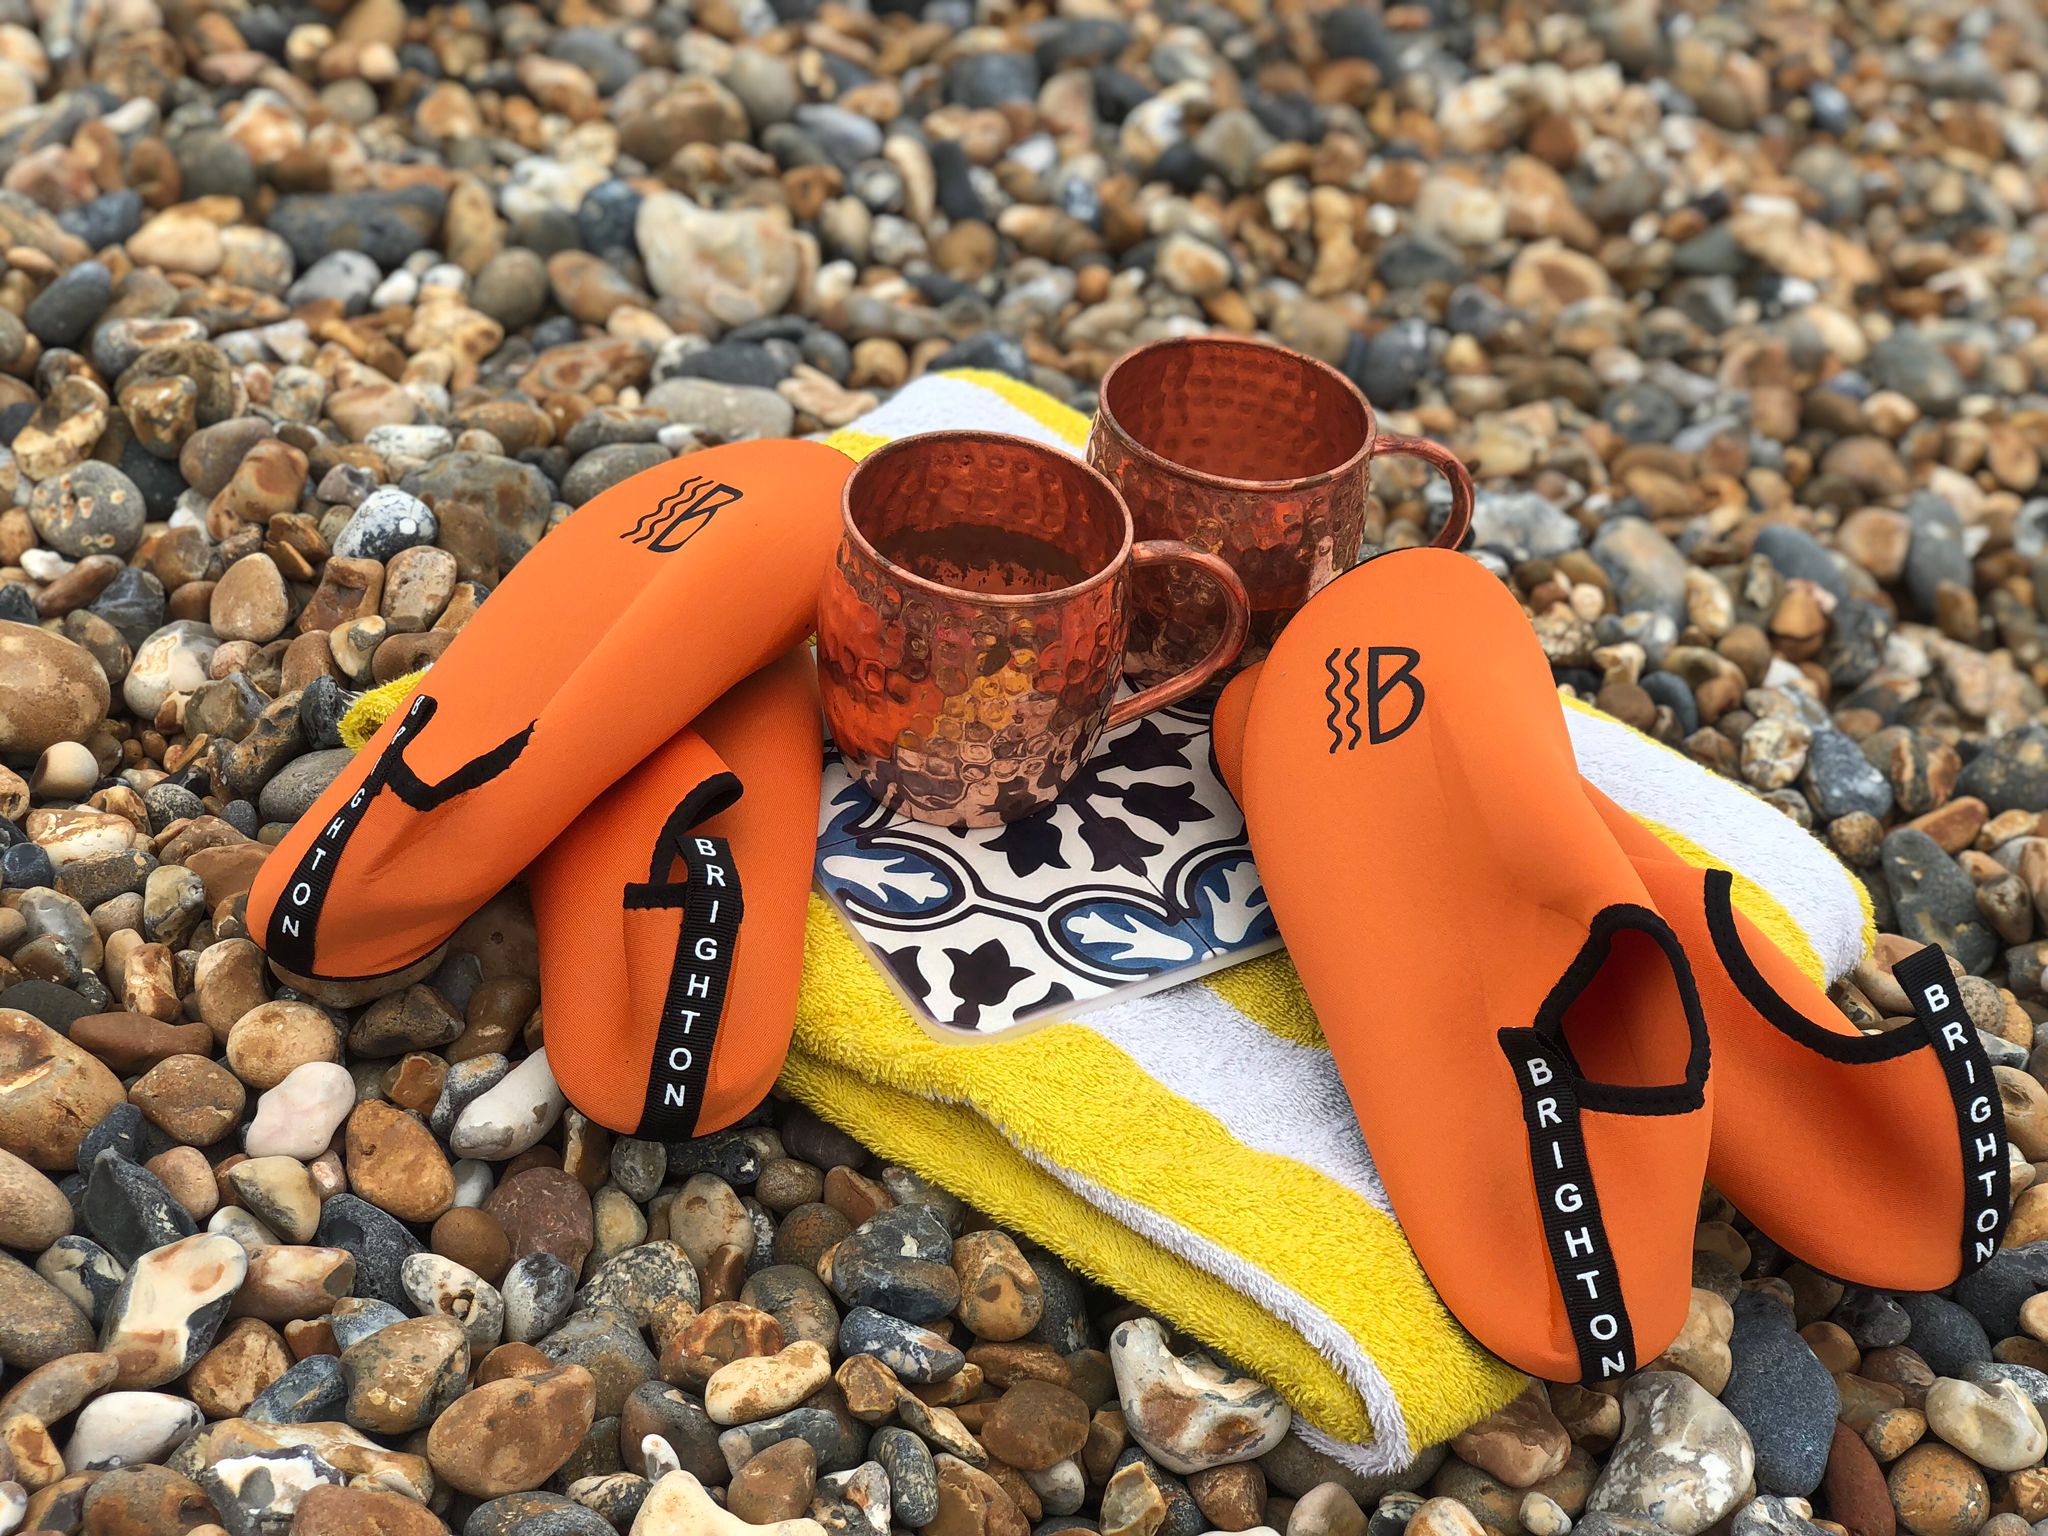 Lifebuoy Orange Water Shoes